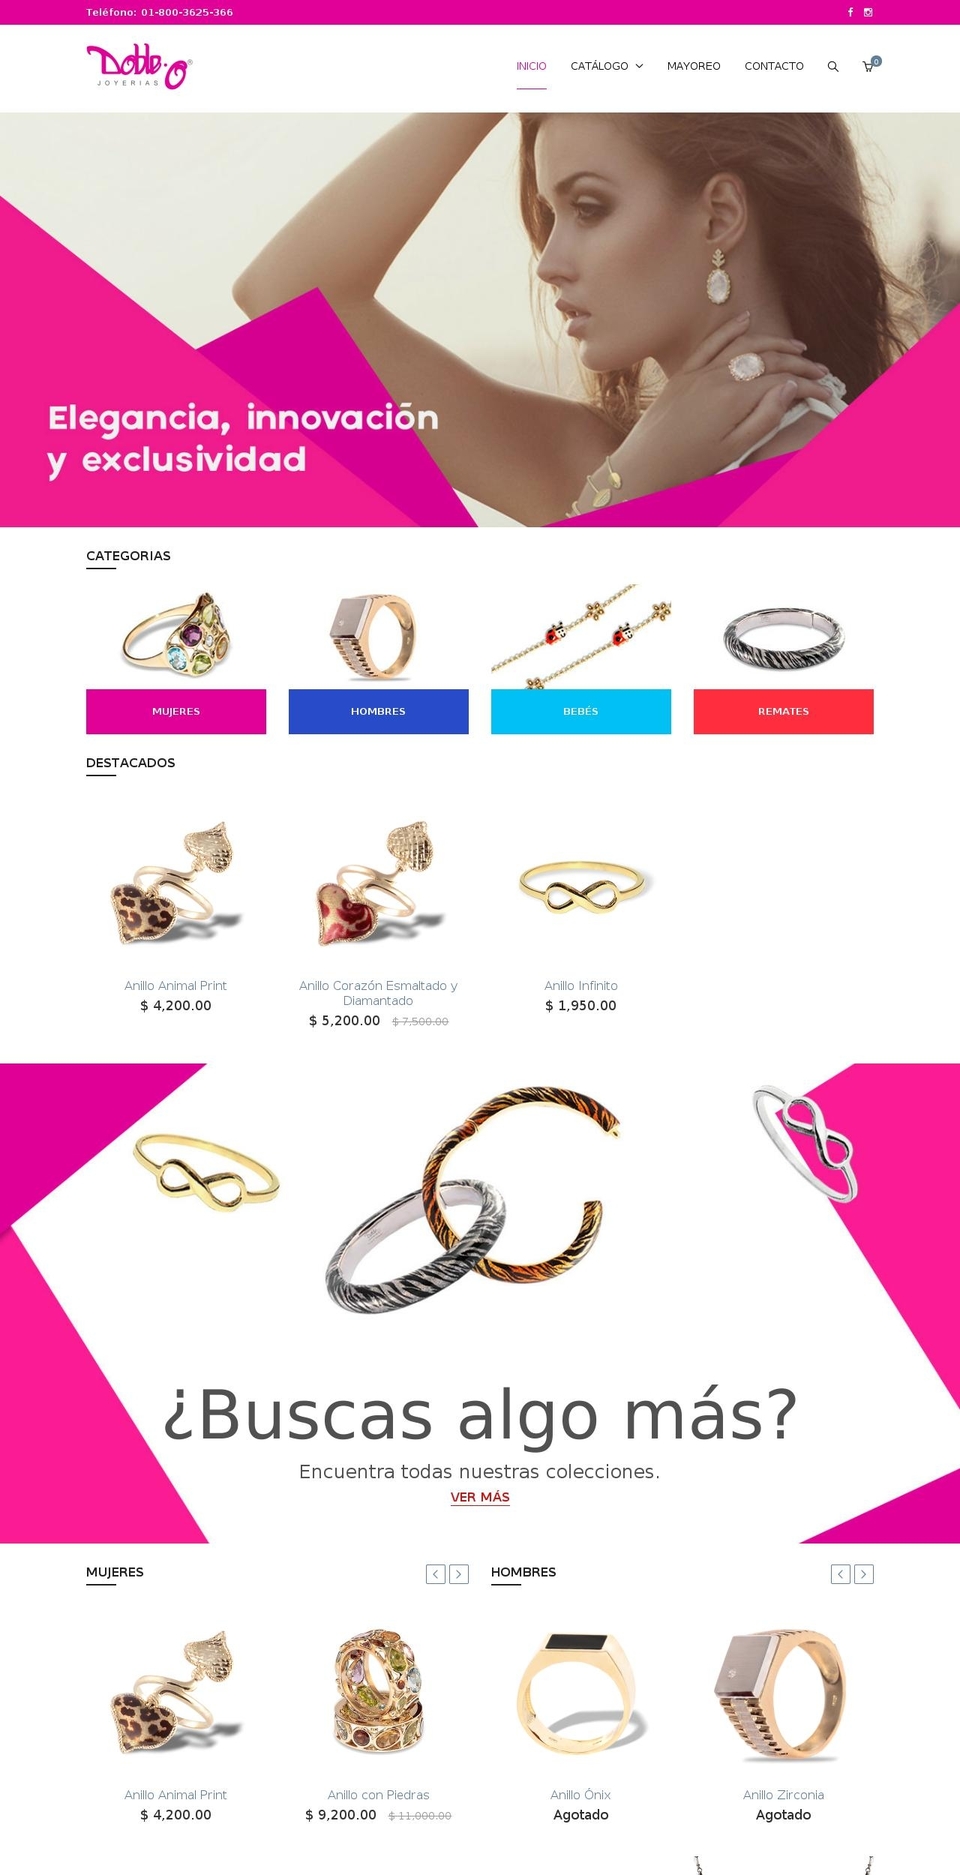 dobleo.mx shopify website screenshot